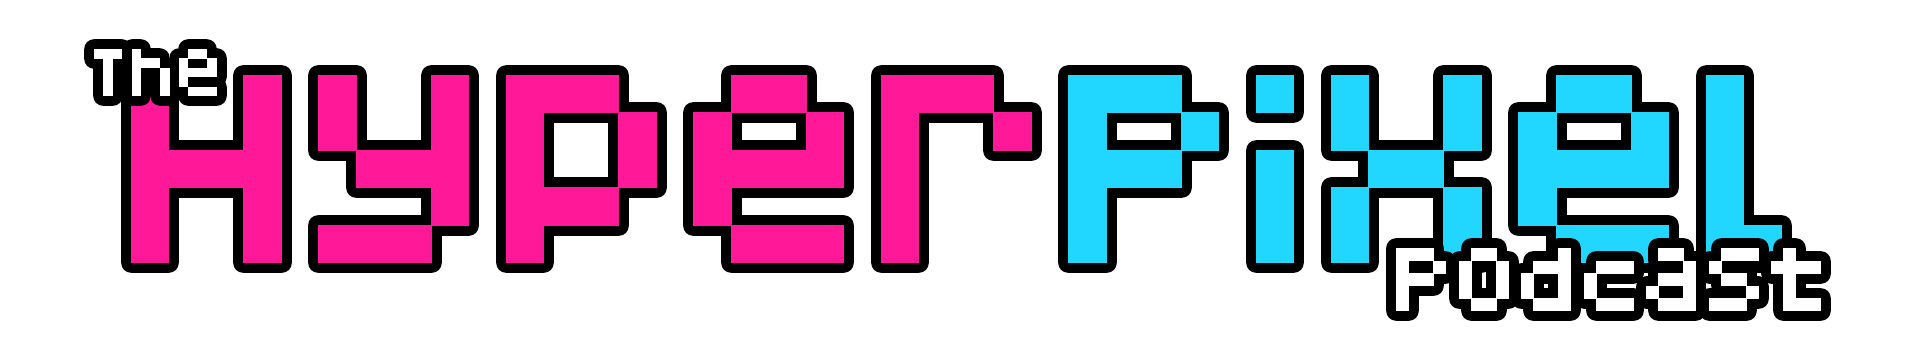 The HyperPixel Podcast Logo